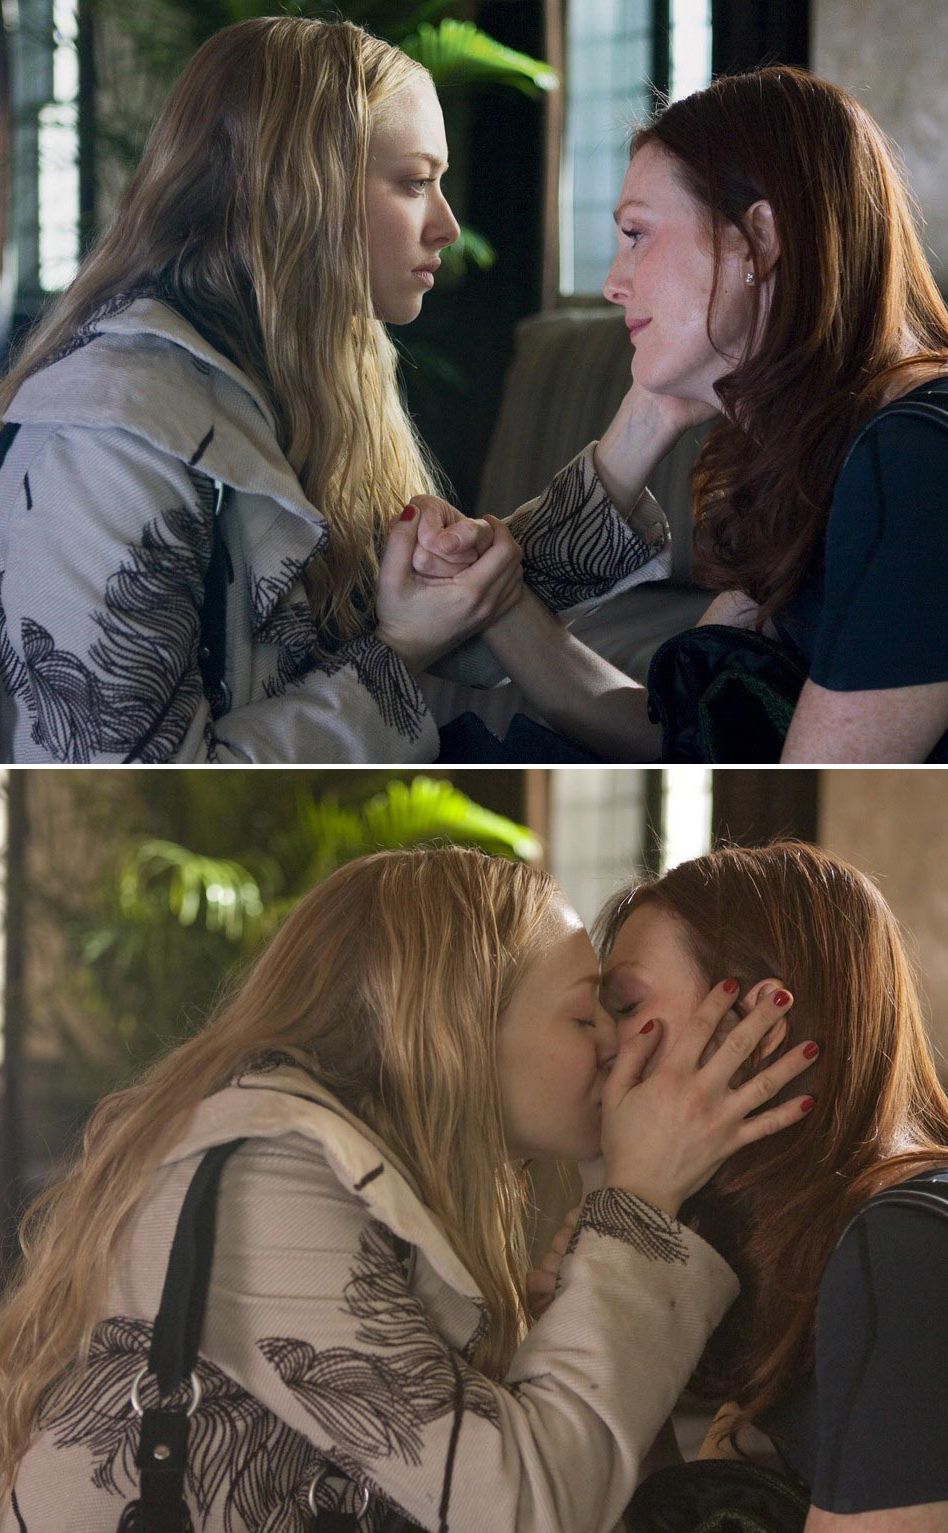 desi oakley share julianne moore lesbian kiss photos